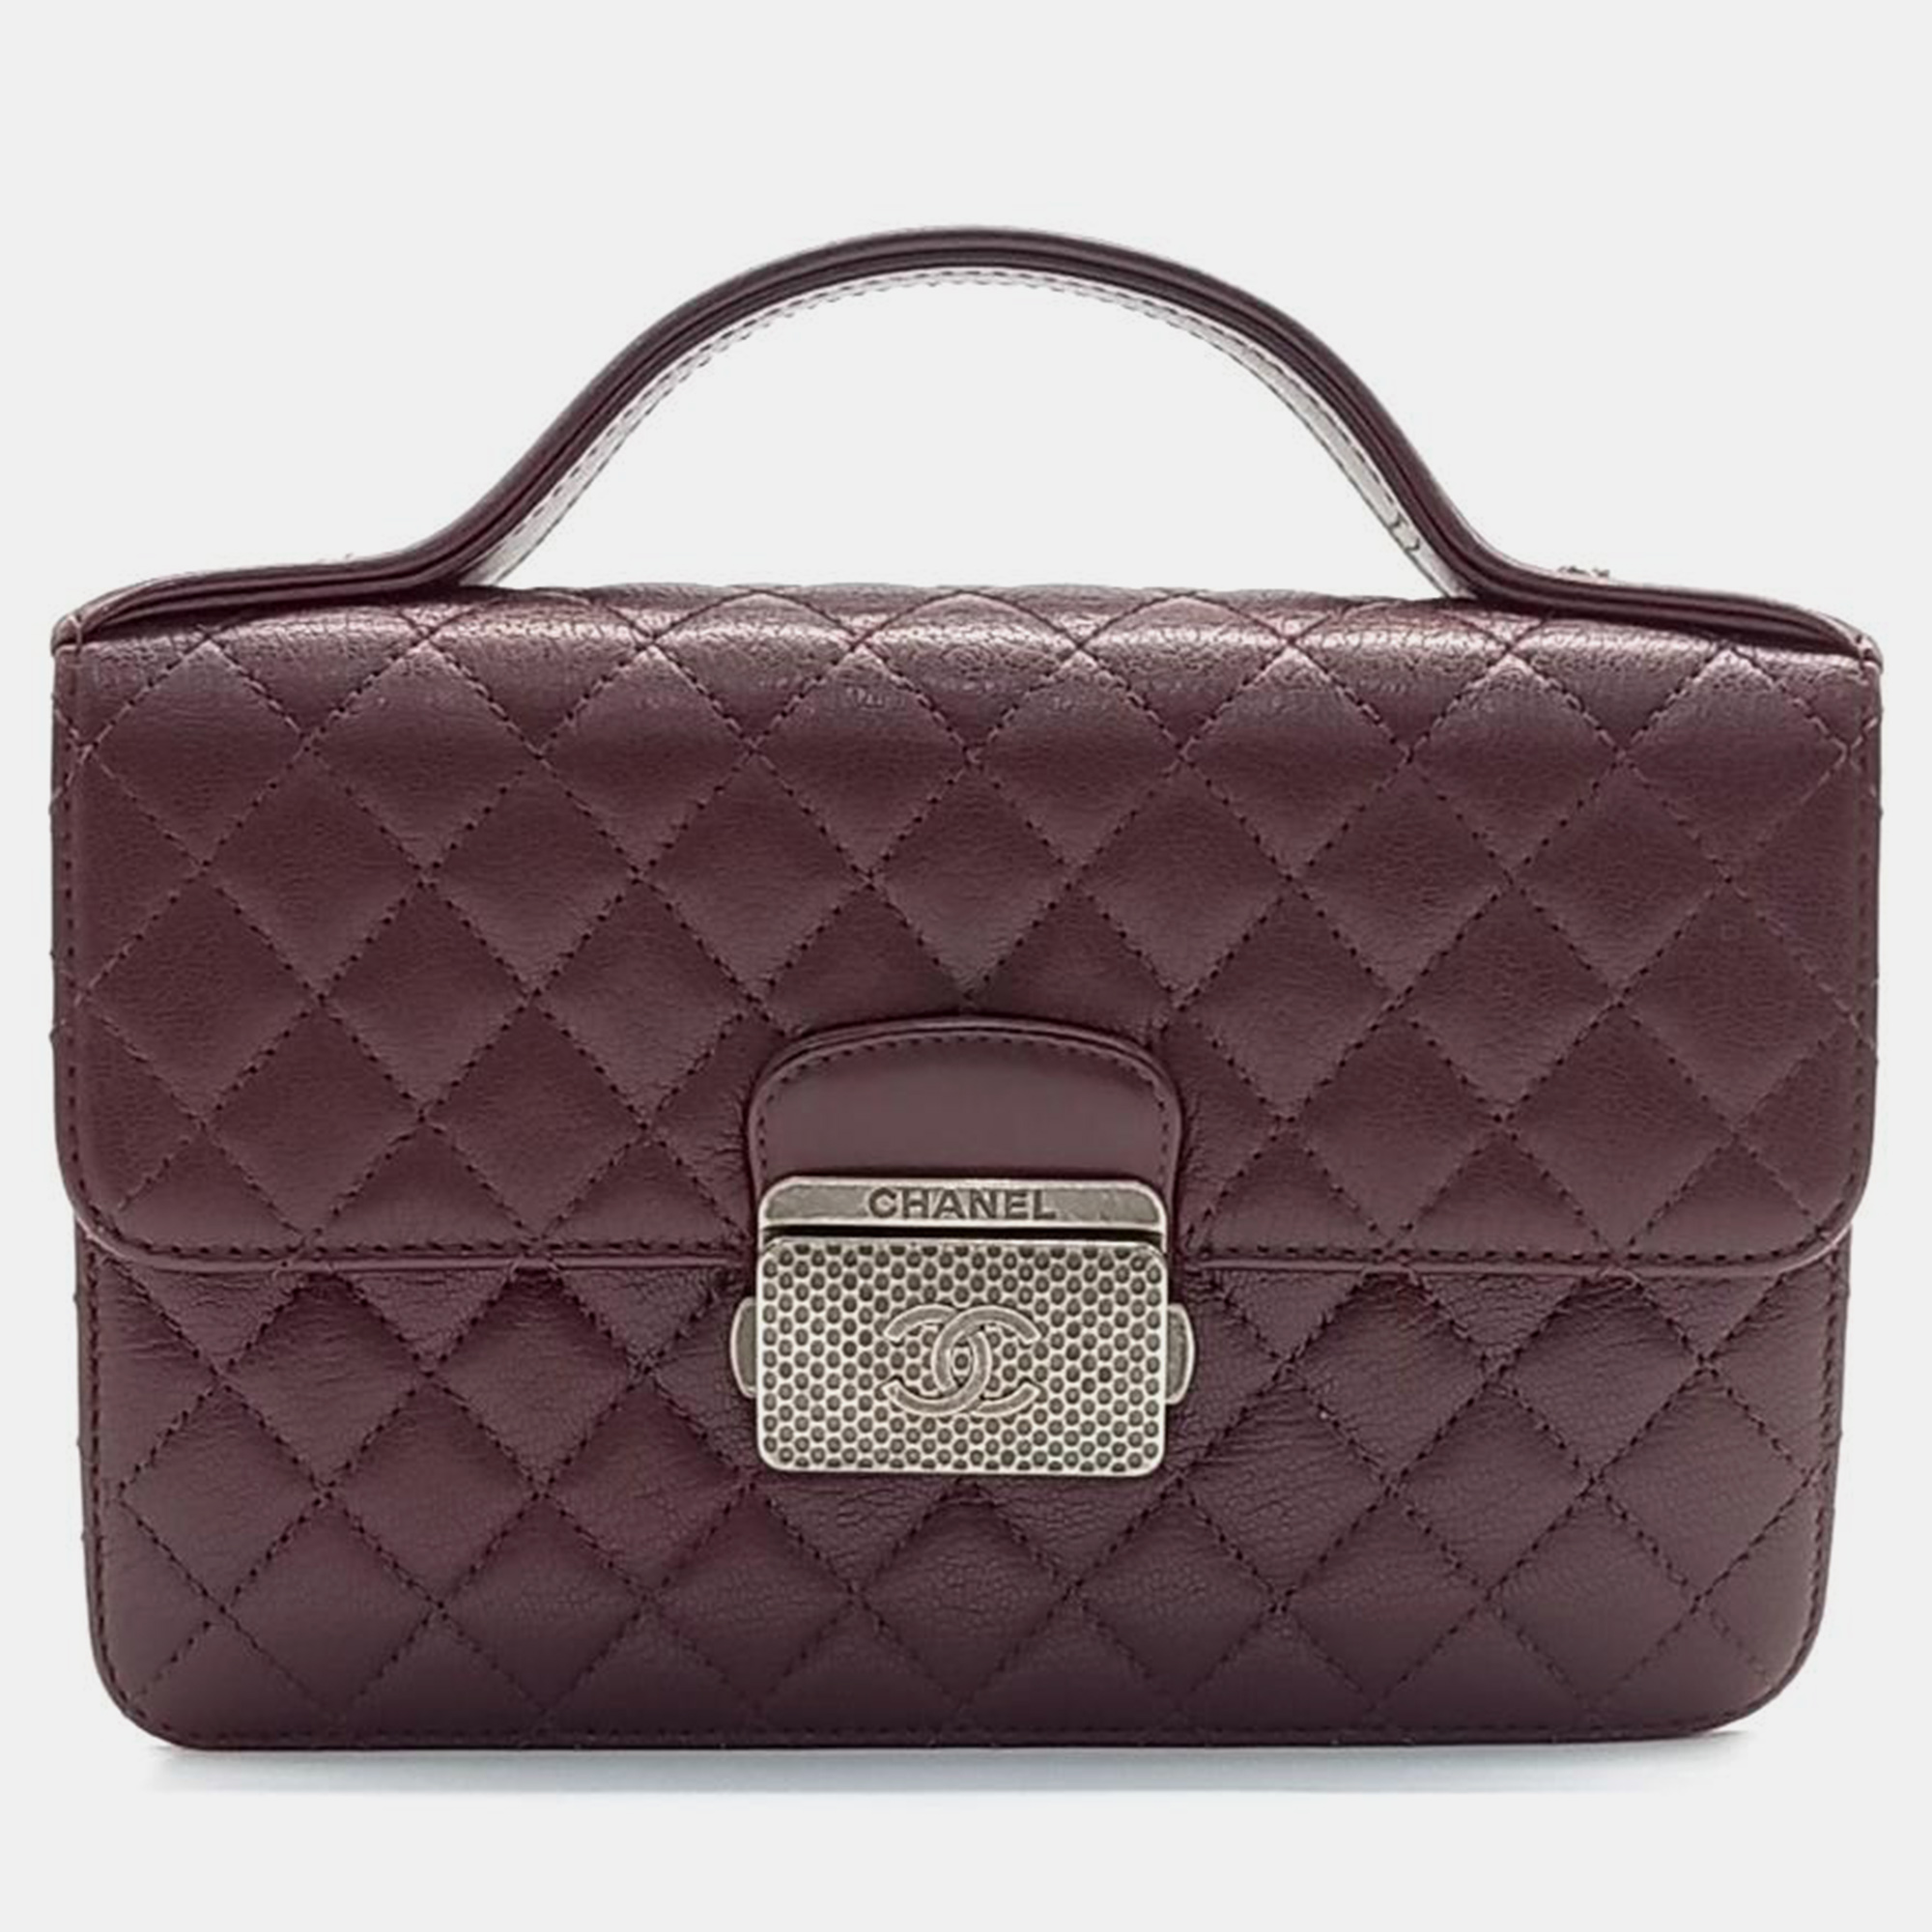 Chanel burgundy leather crossbody bag